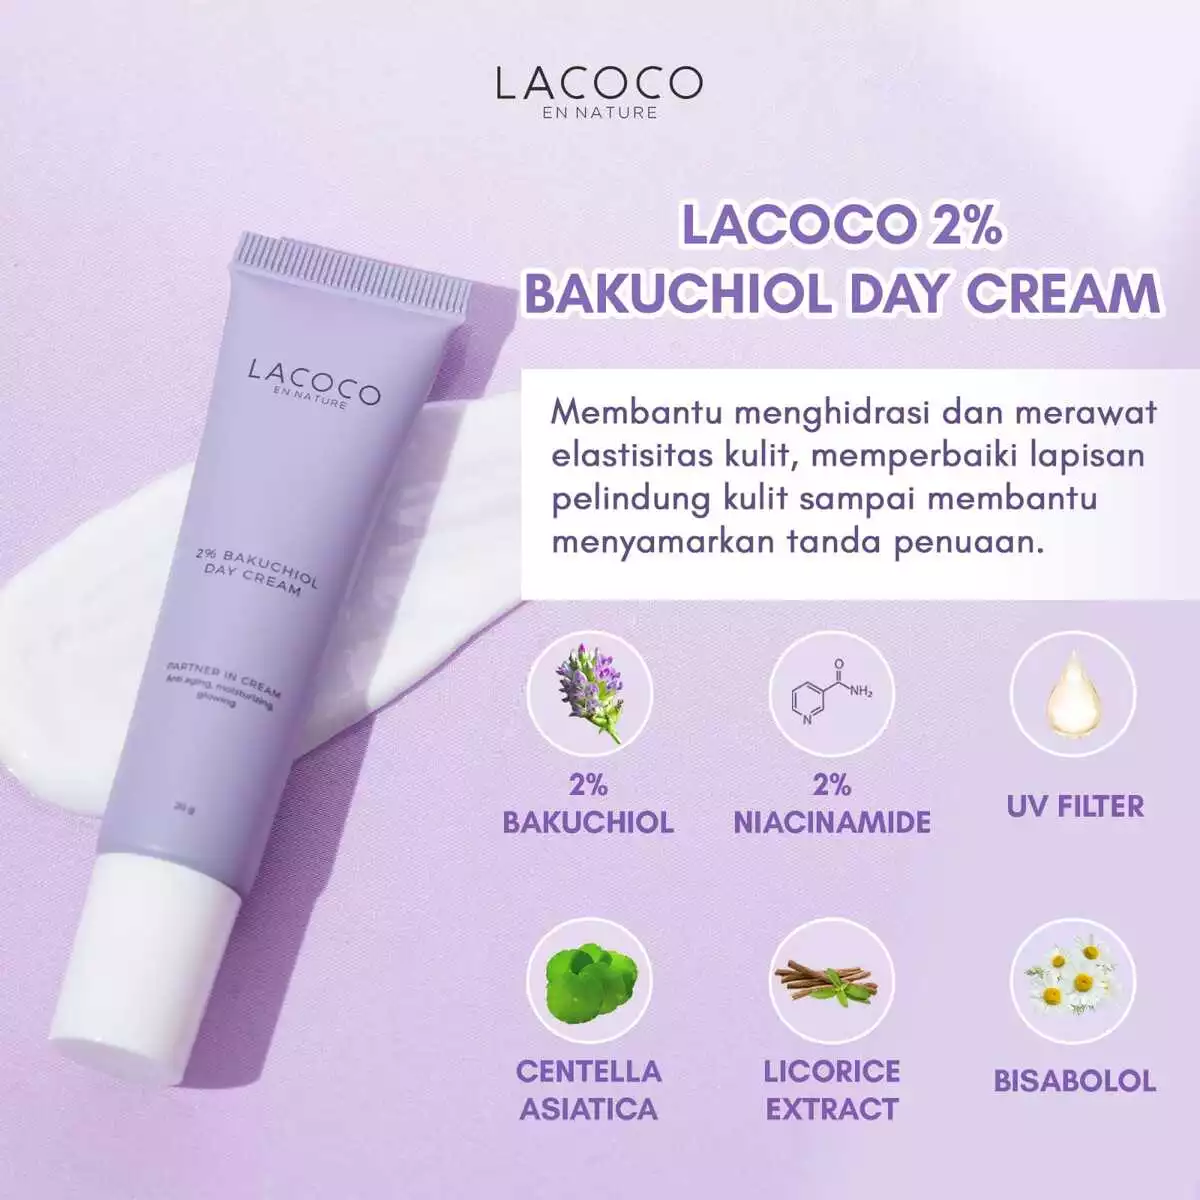 Fungsi Lacoco Bakuchiol Day Cream